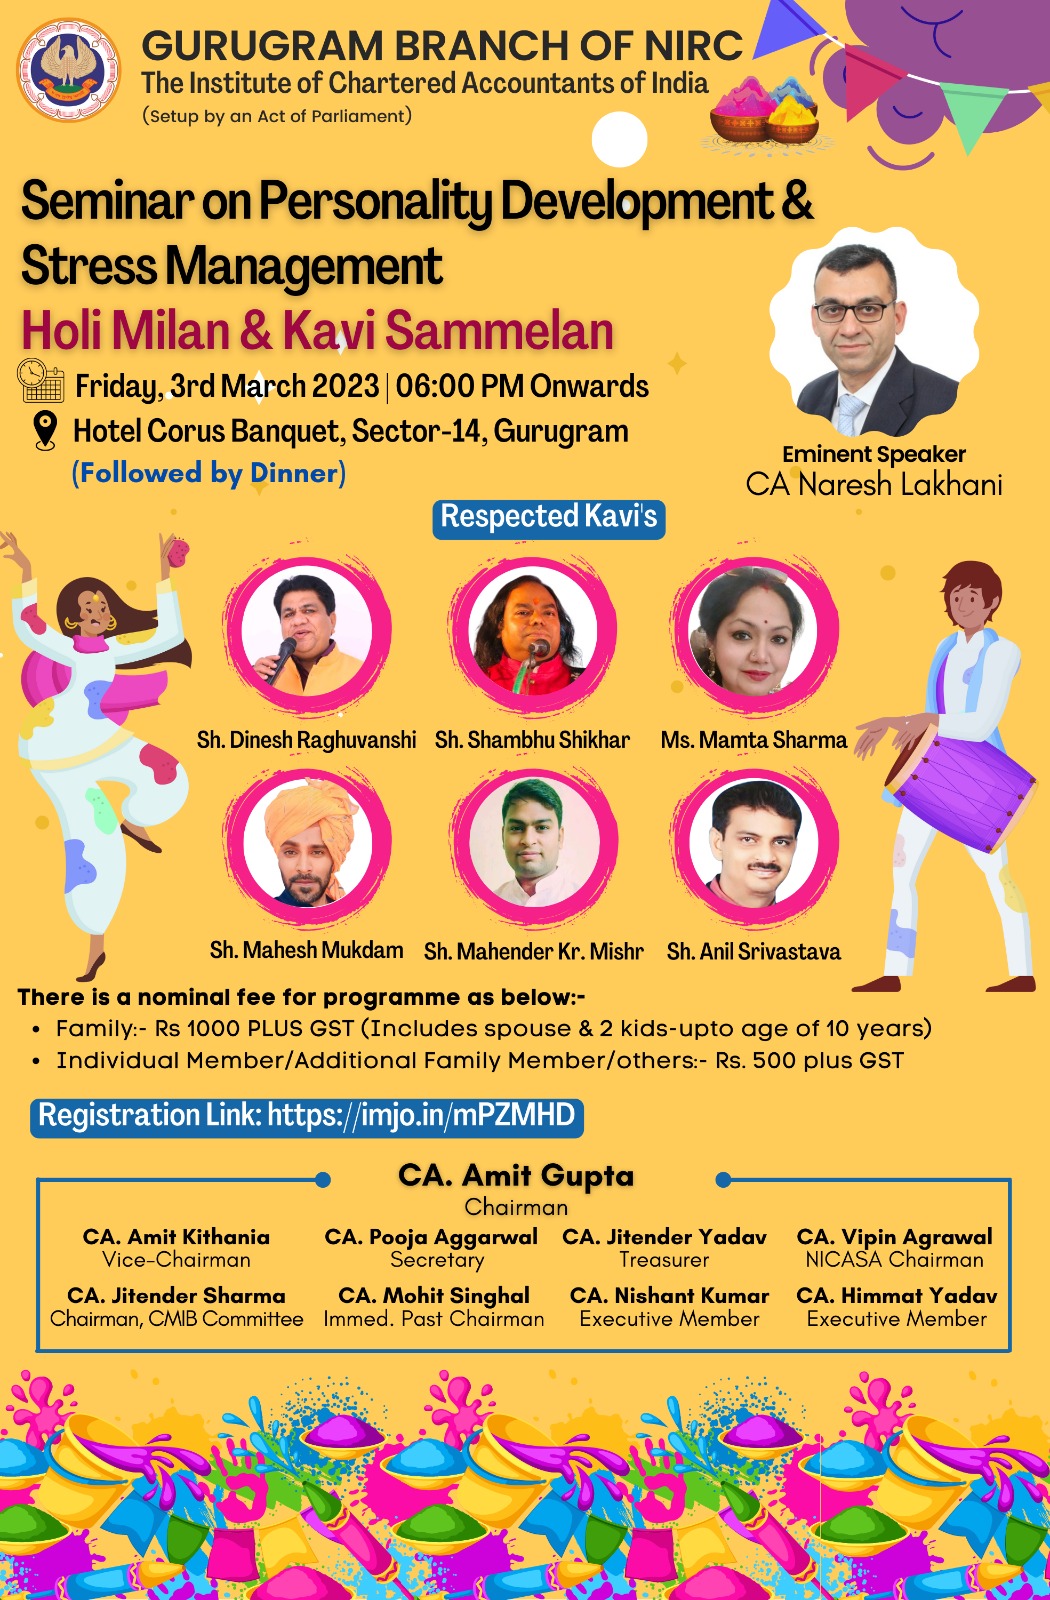 Seminar on Personality Development & Stress Management with Holi Milan & Kavi Sammelan